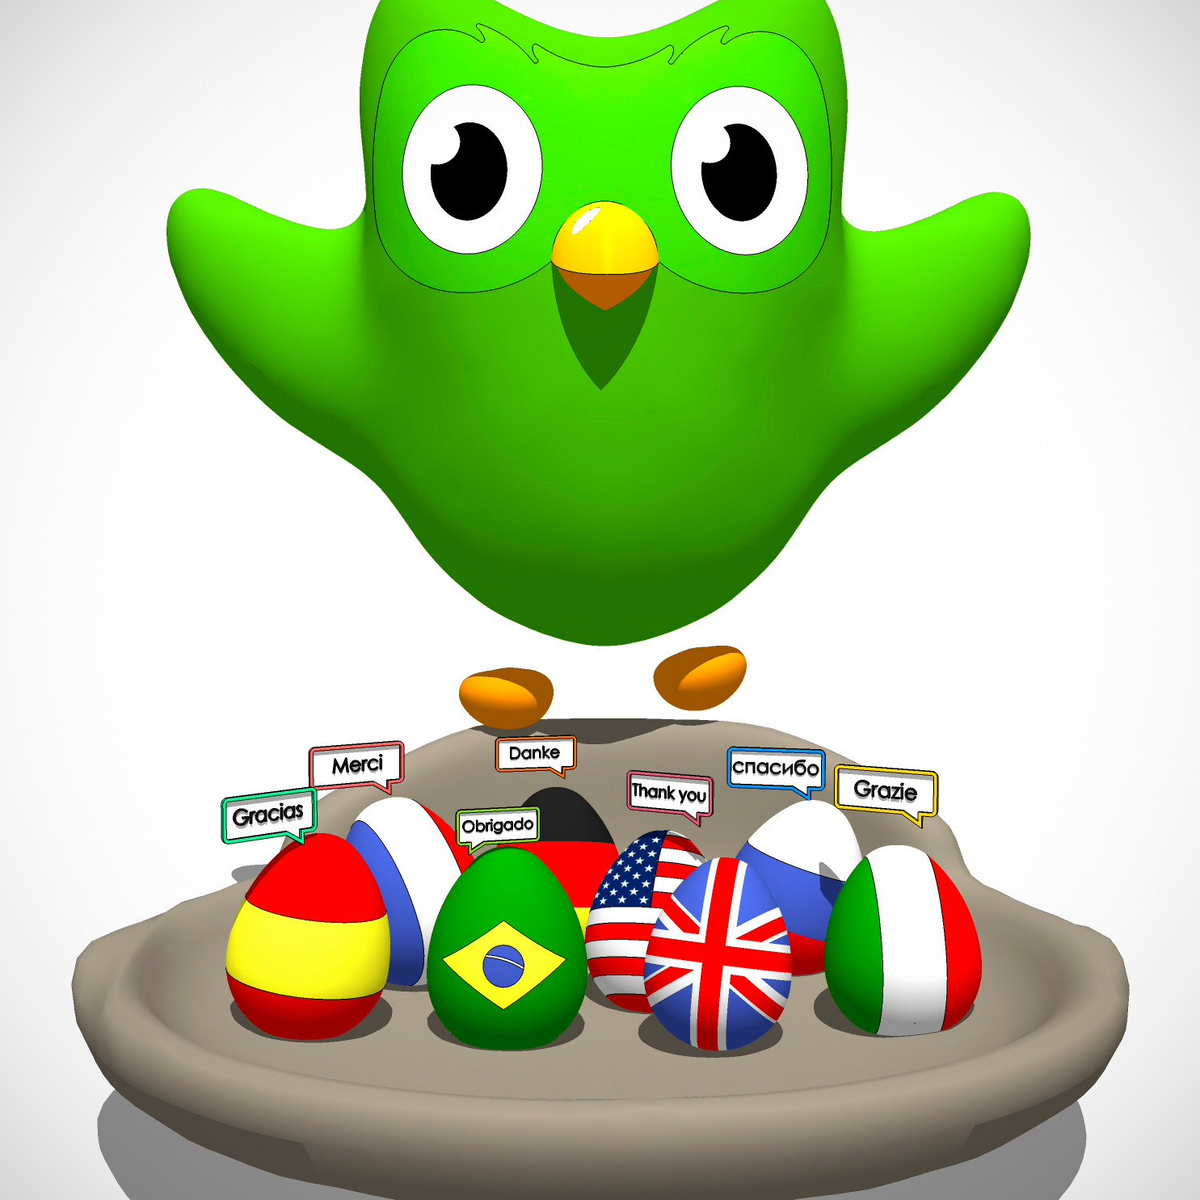 Https duolingo com. Duolingo. Duolingo Duo. Duolingo приложение. Значок Дуолинго.